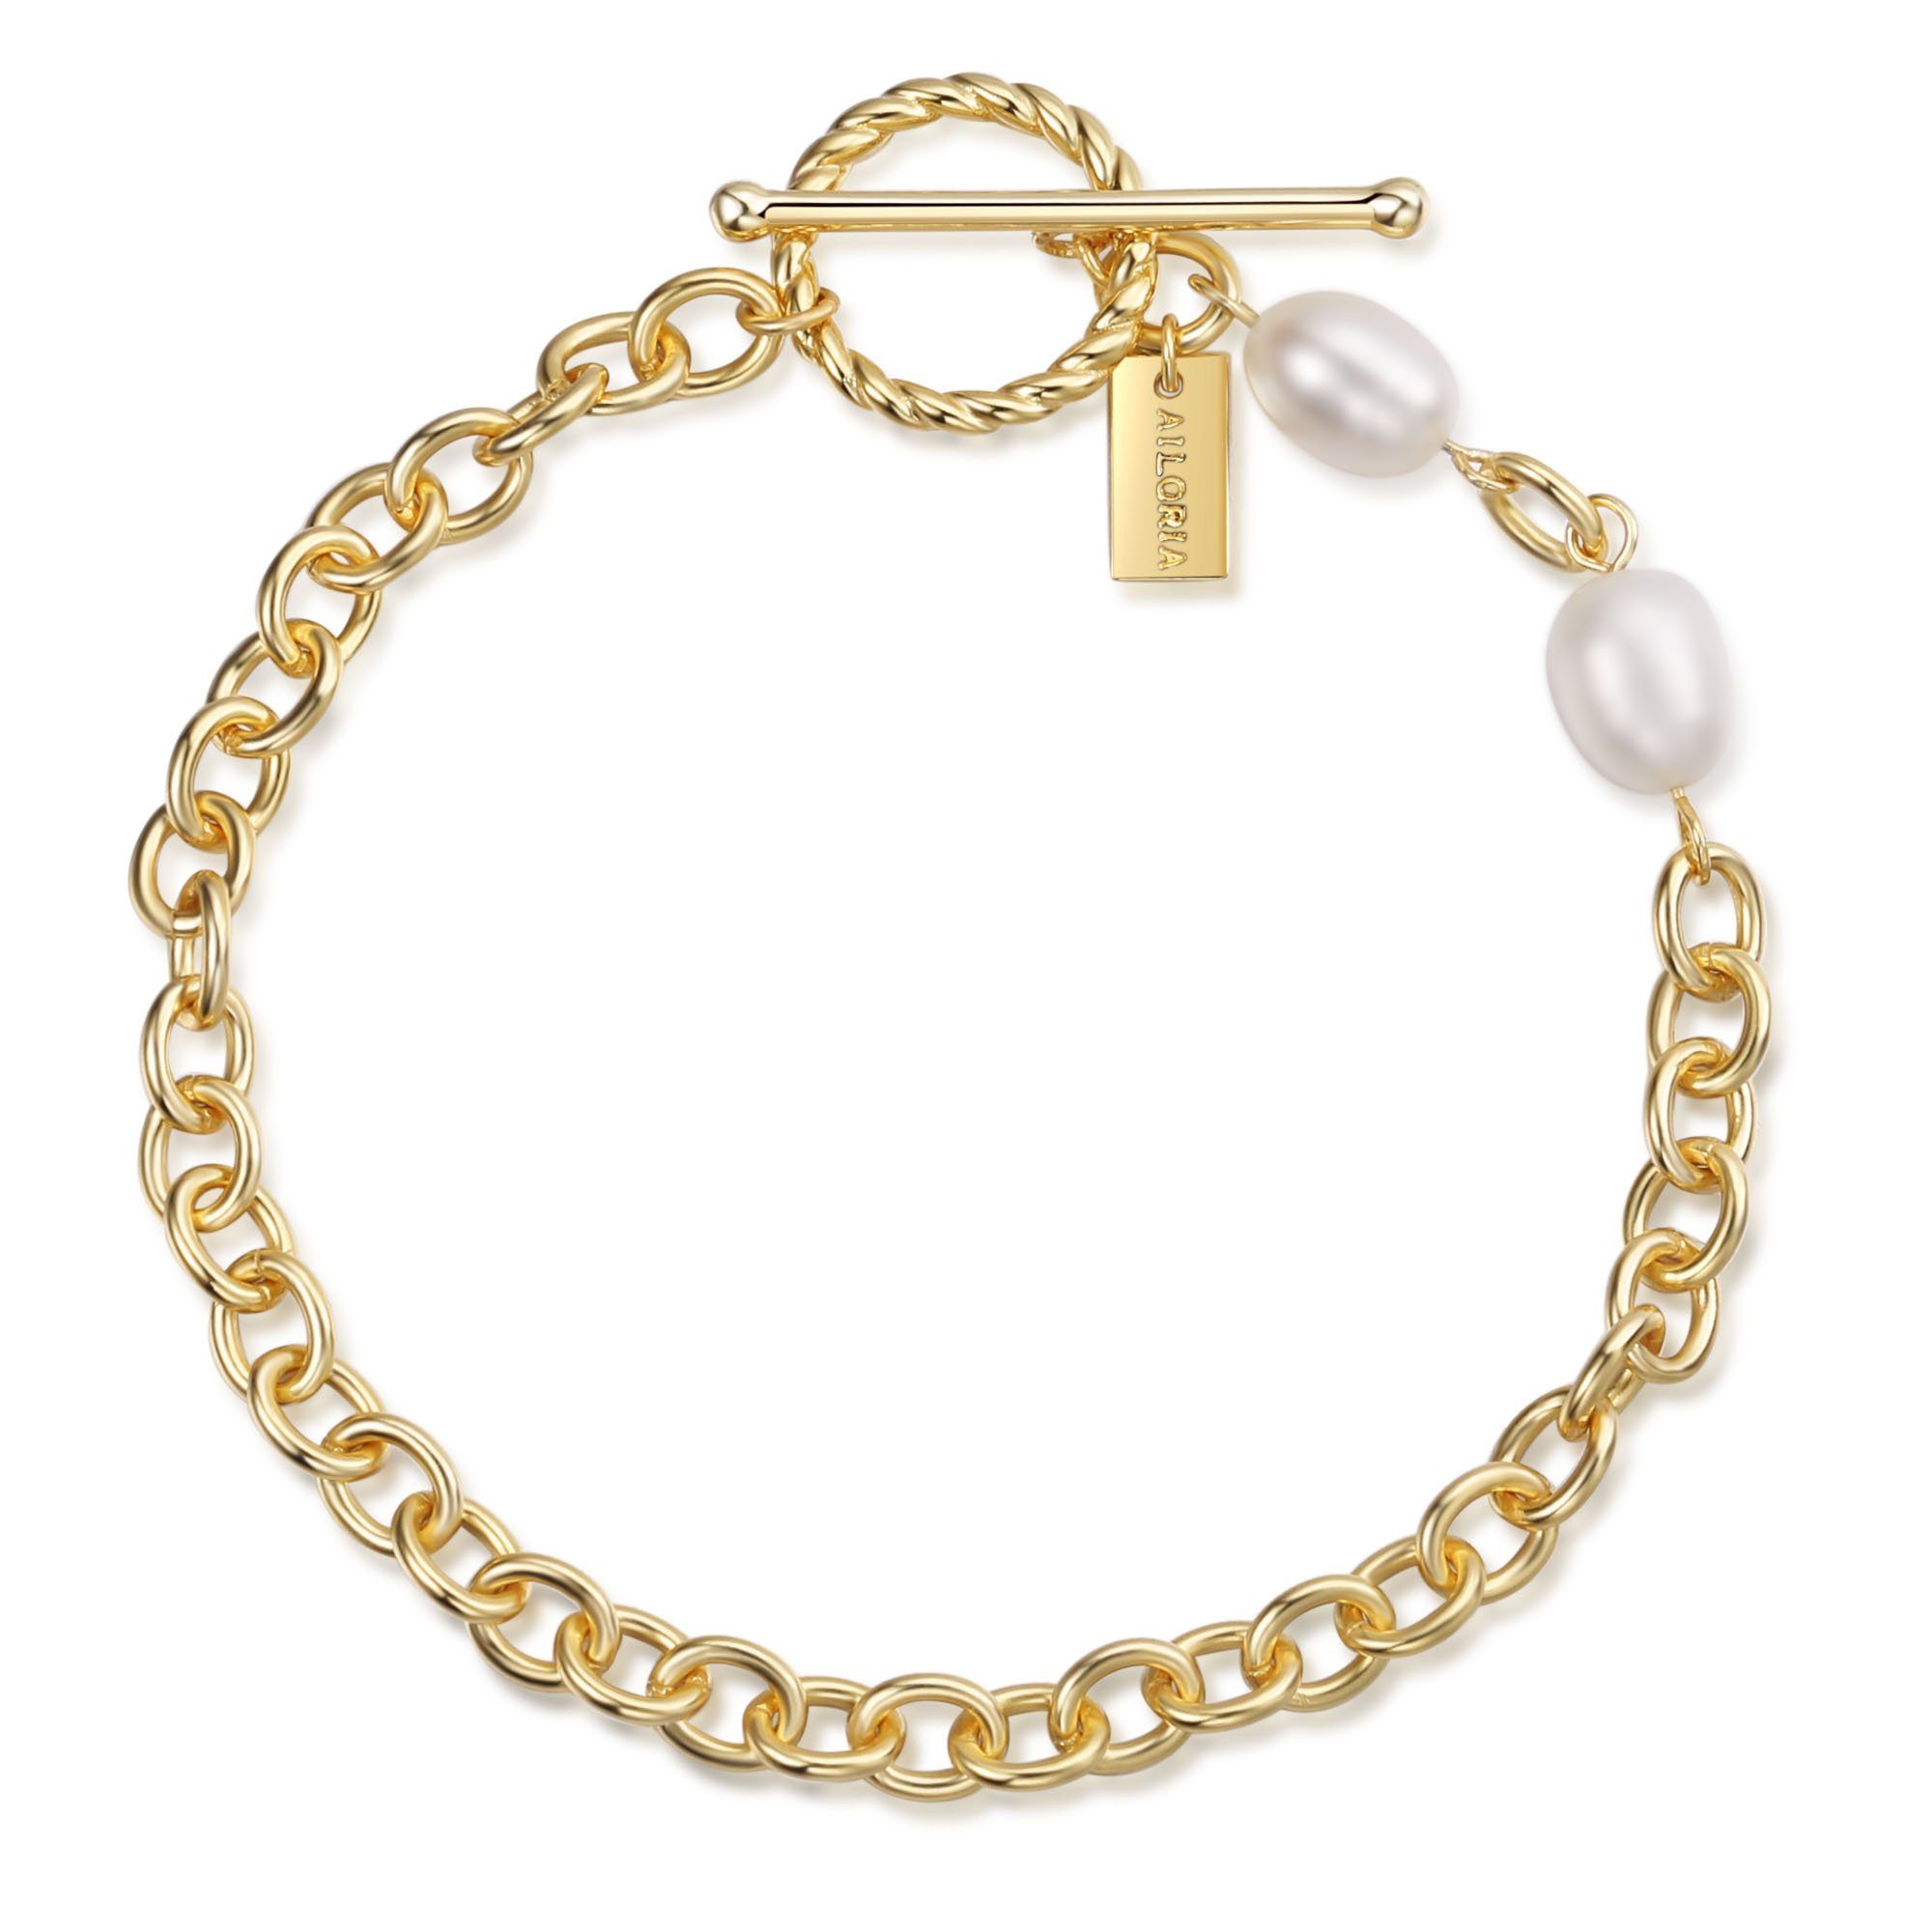 Honpo supergünstiger Versandhandel! AILORIA Armband SHOUHEI Perle gold/weiße gold/weiße perle, armband Armband